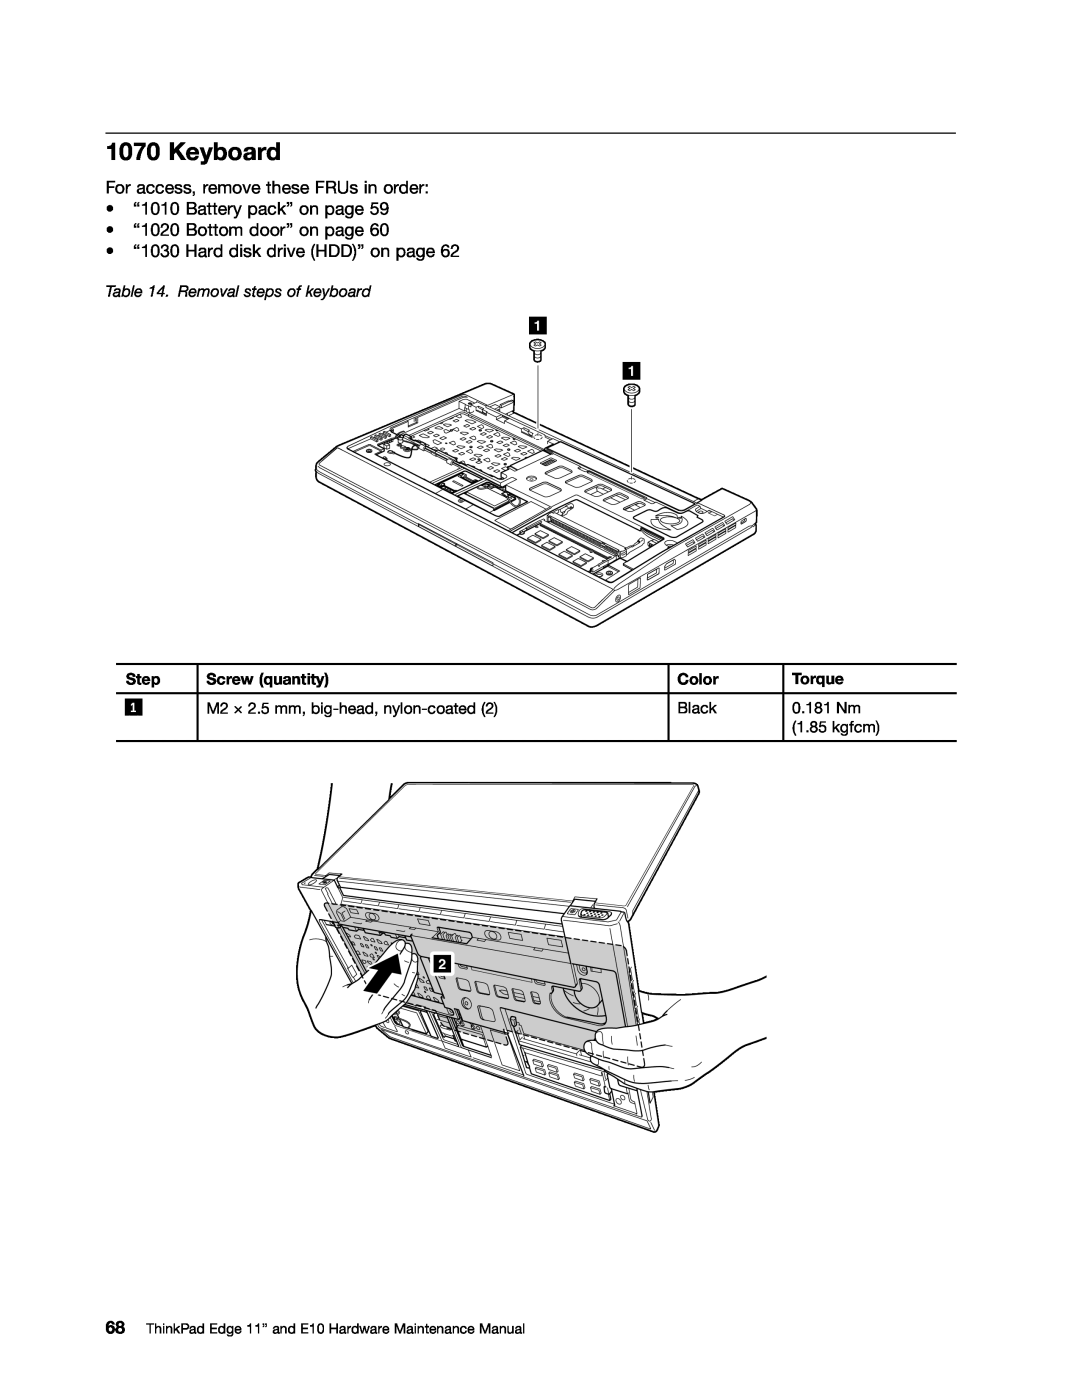 Lenovo manual Keyboard, Removal steps of keyboard, ThinkPad Edge 11” and E10 Hardware Maintenance Manual 